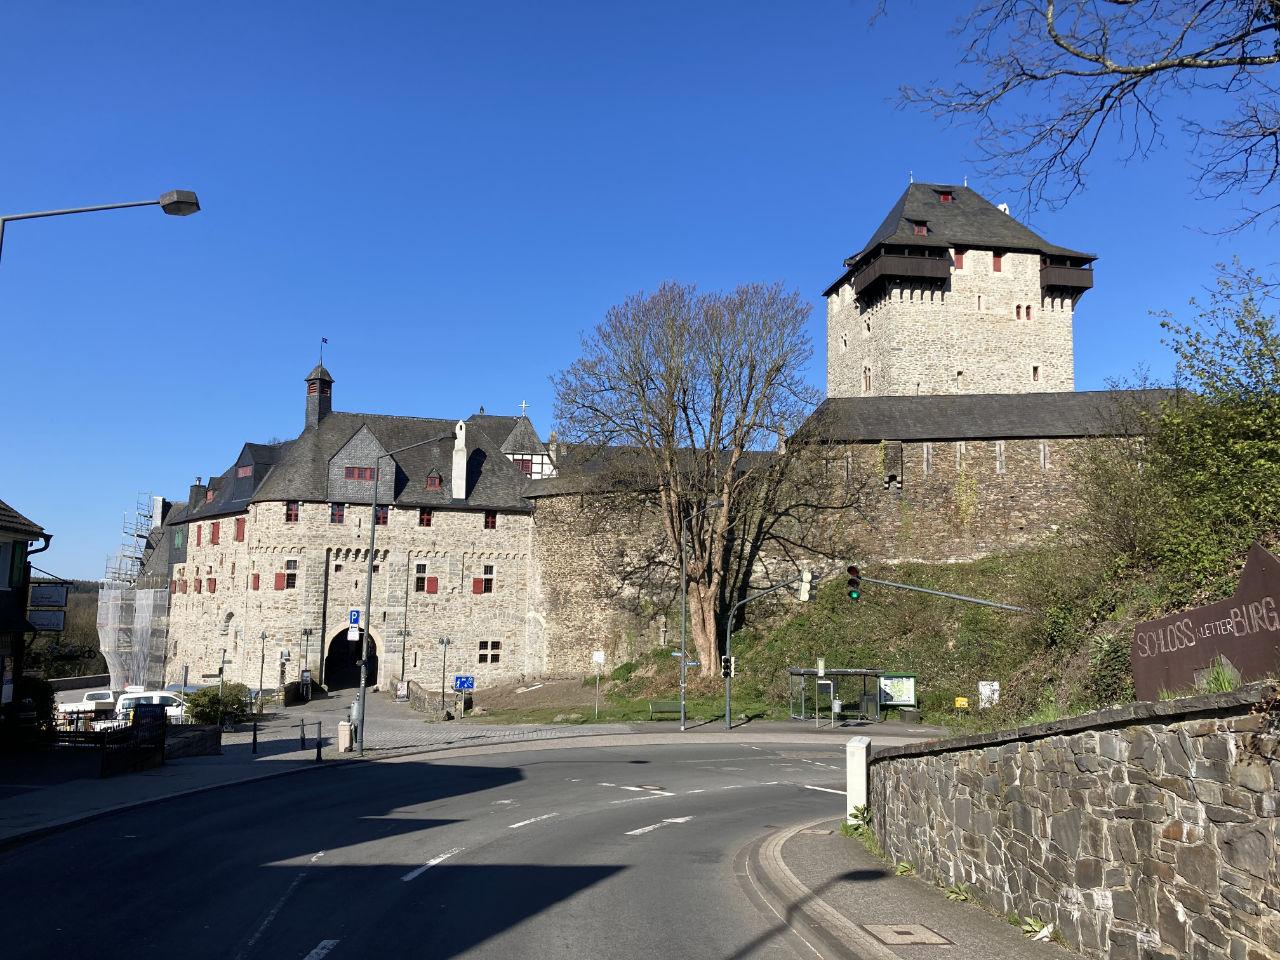 Schloss Burg, Solingen